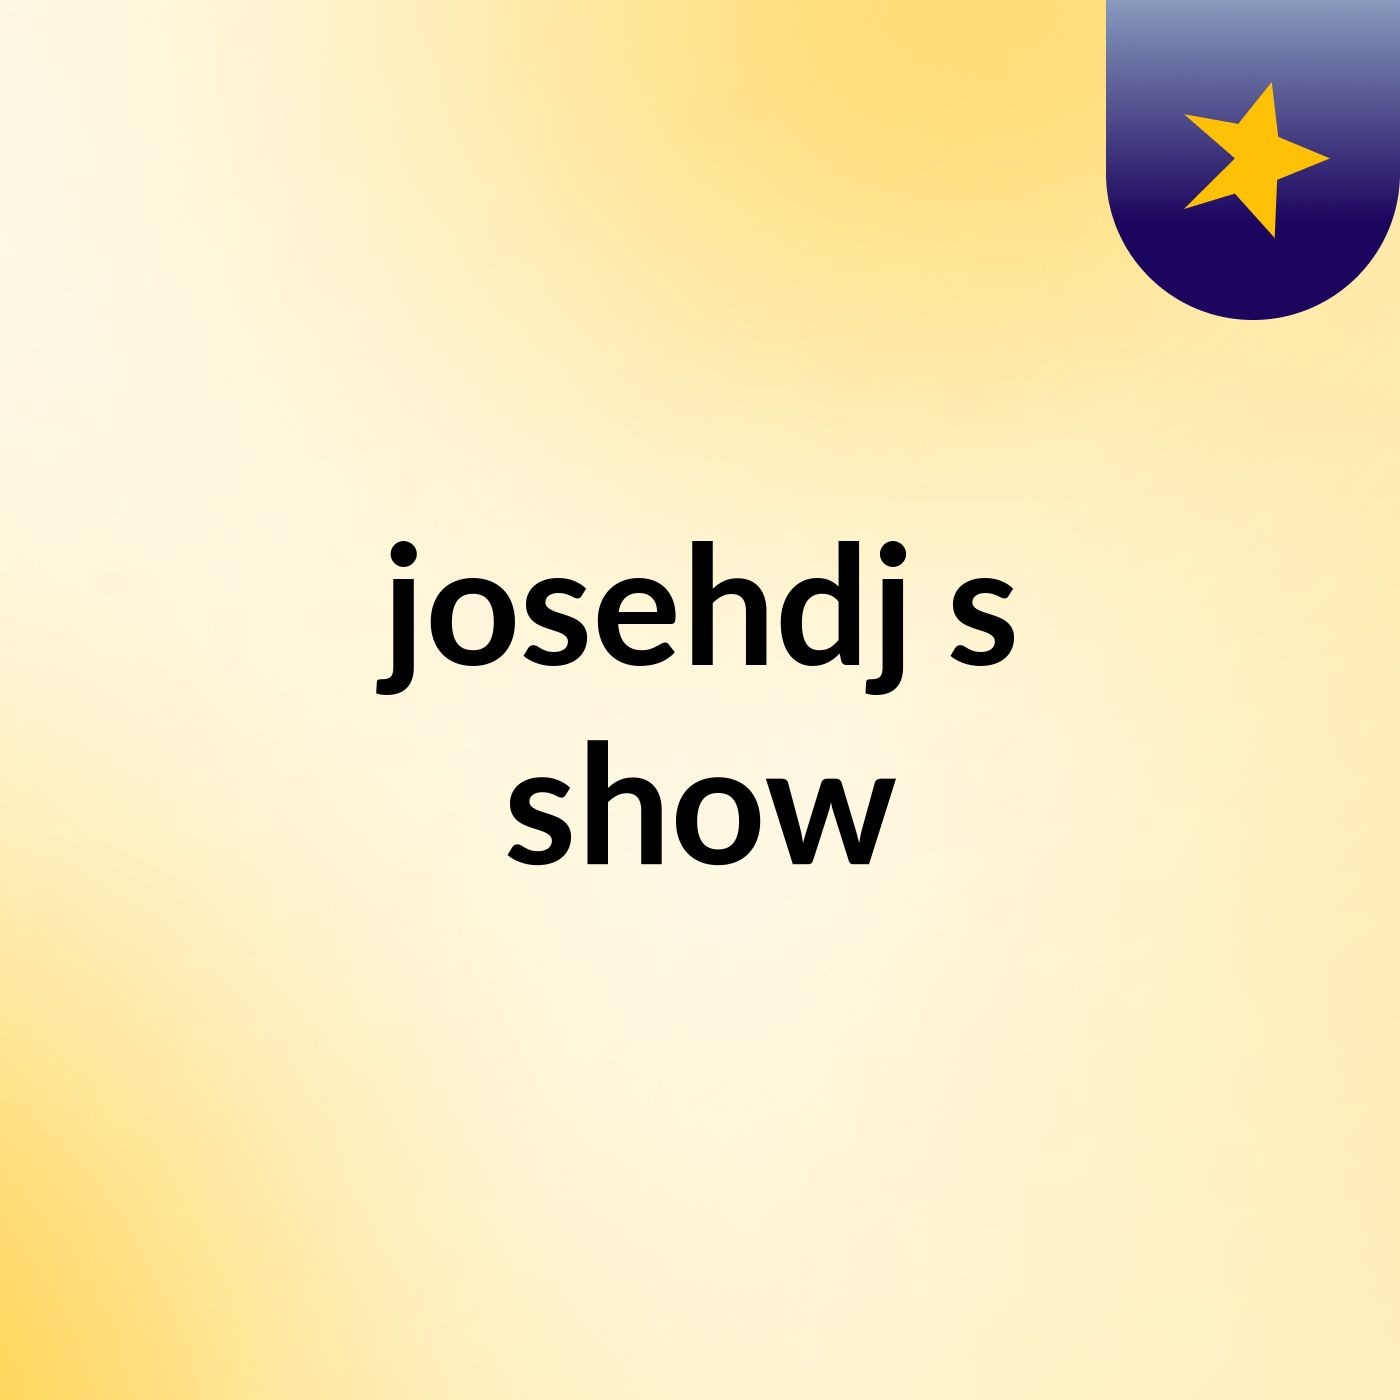 josehdj's show